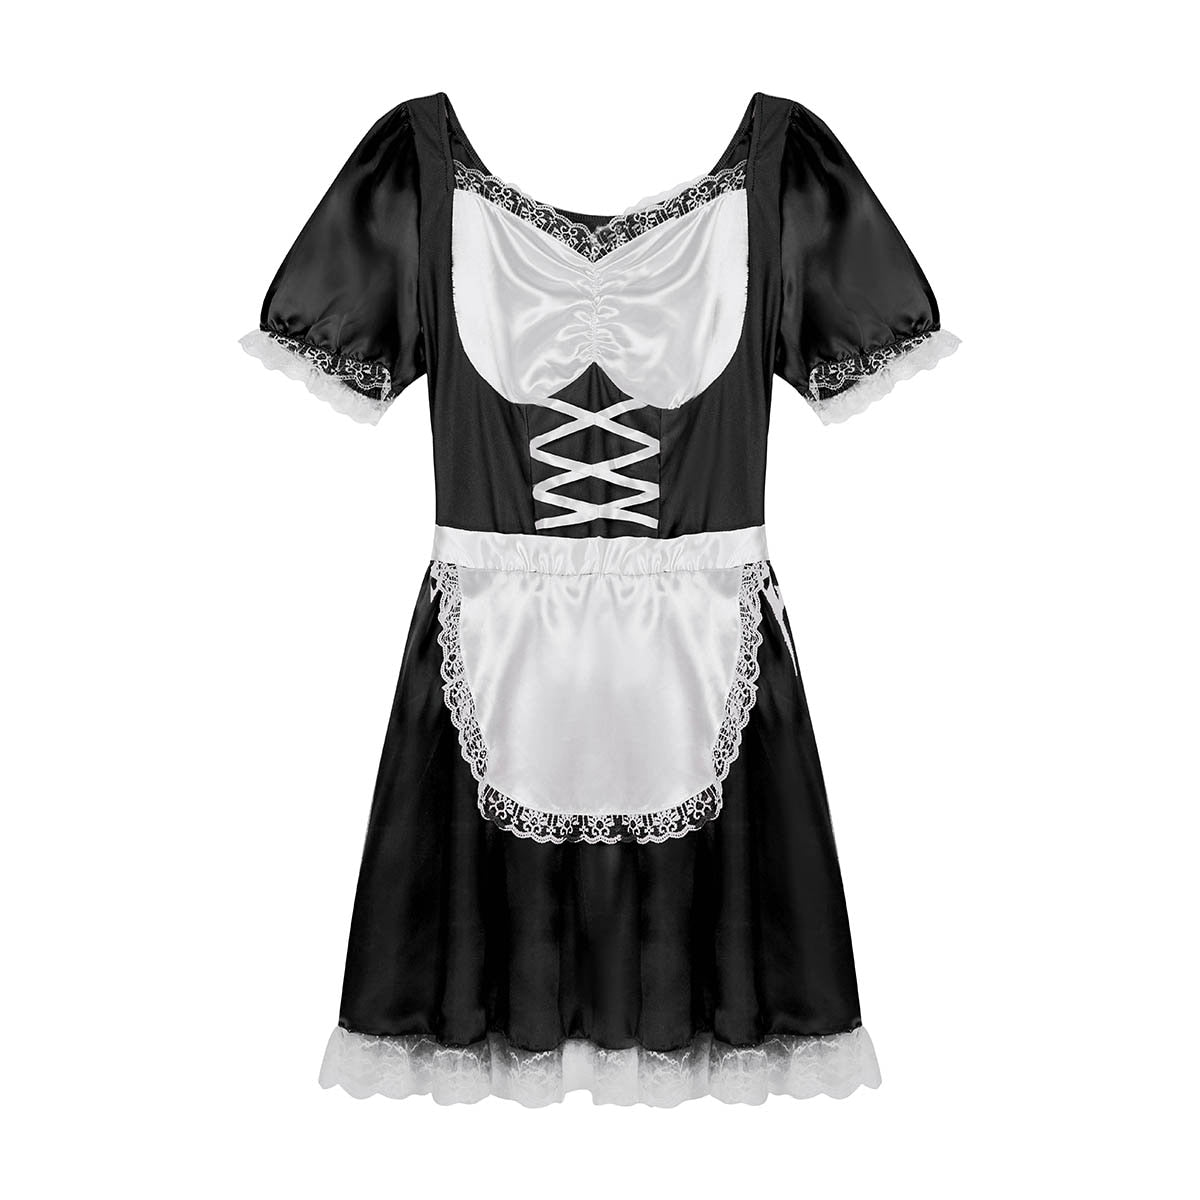 "Sissy Celestia" Maid Dress